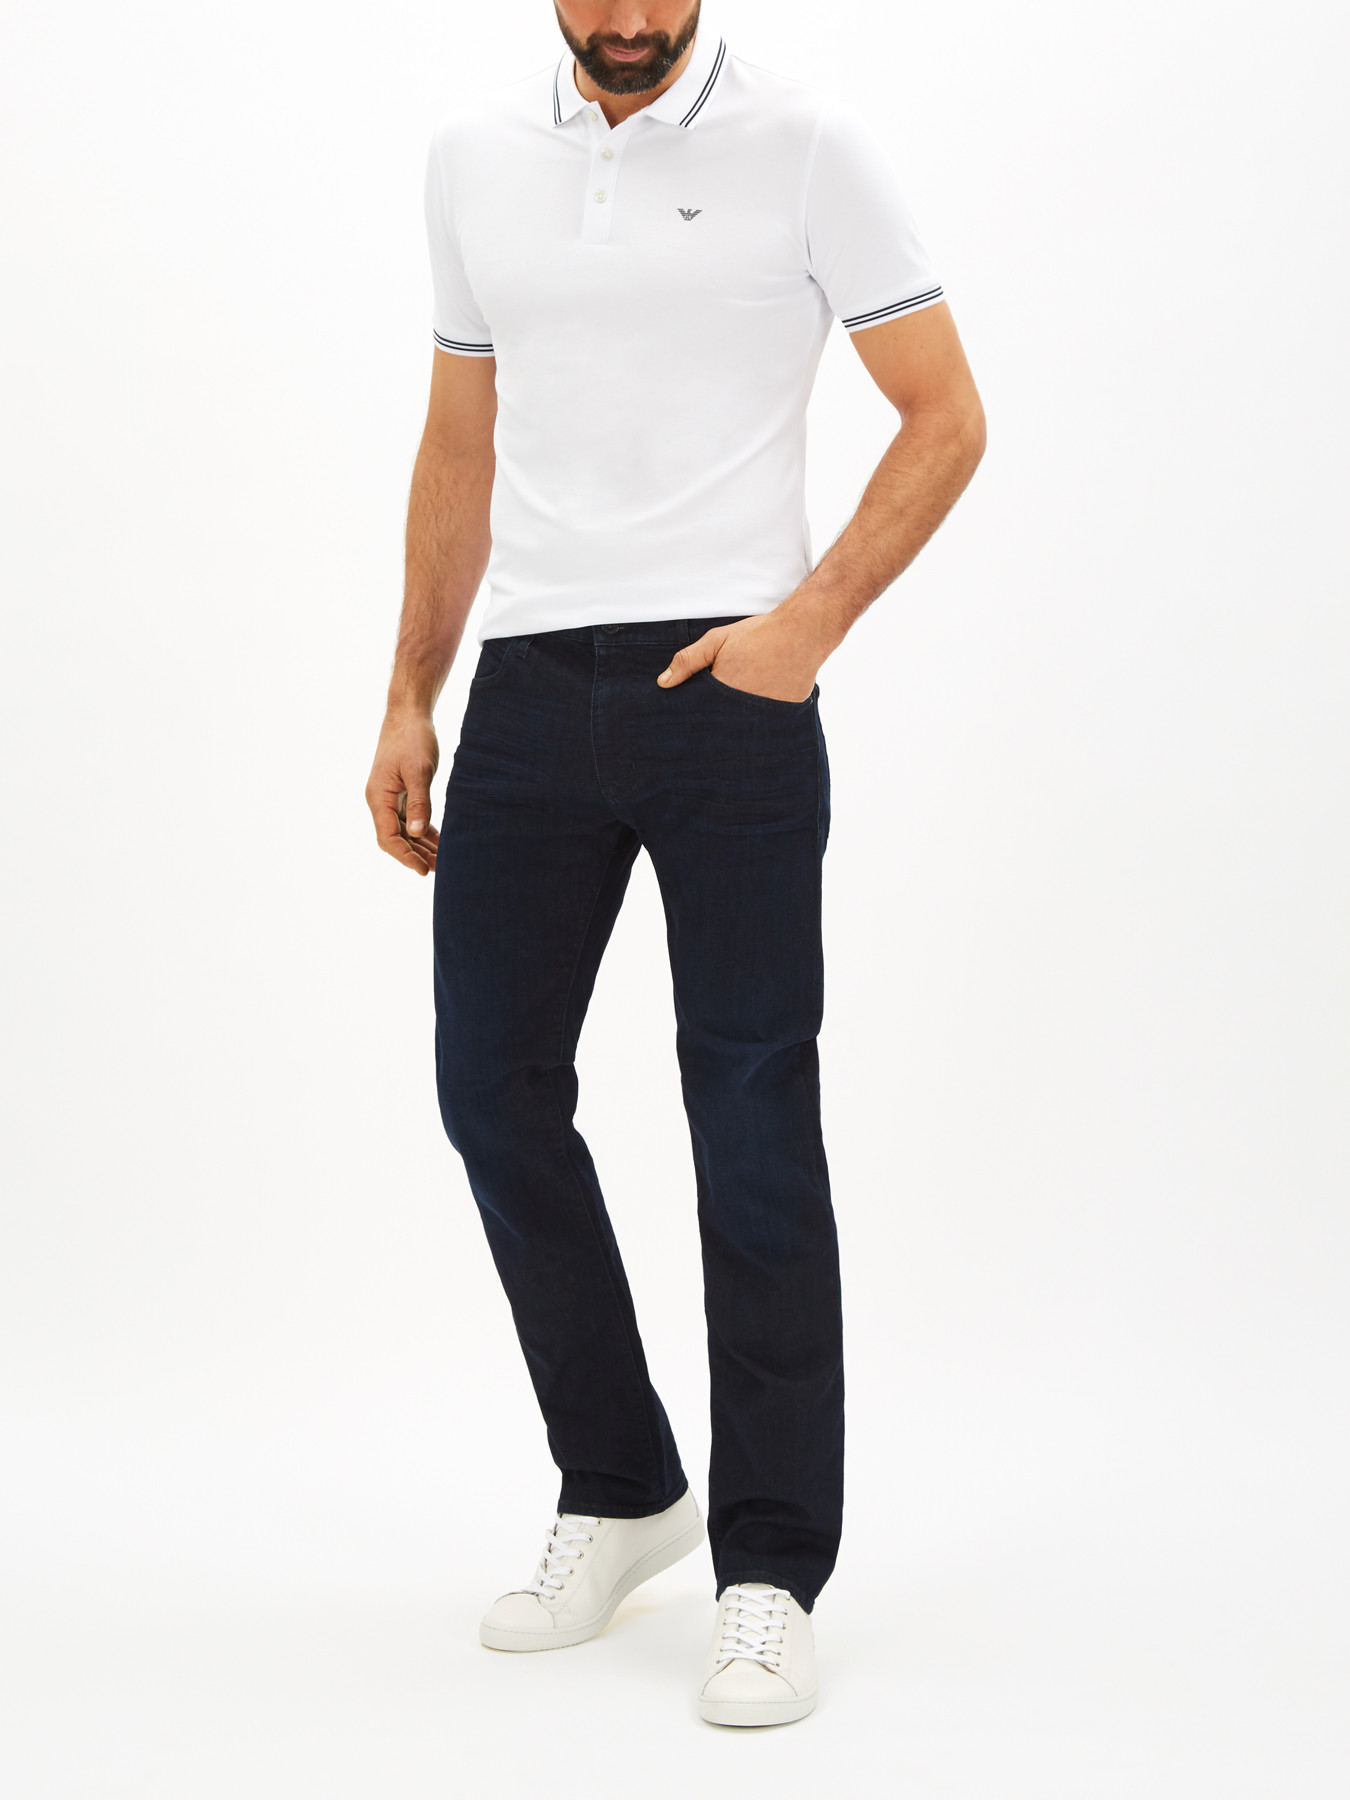 emporio armani j45 regular tapered jeans